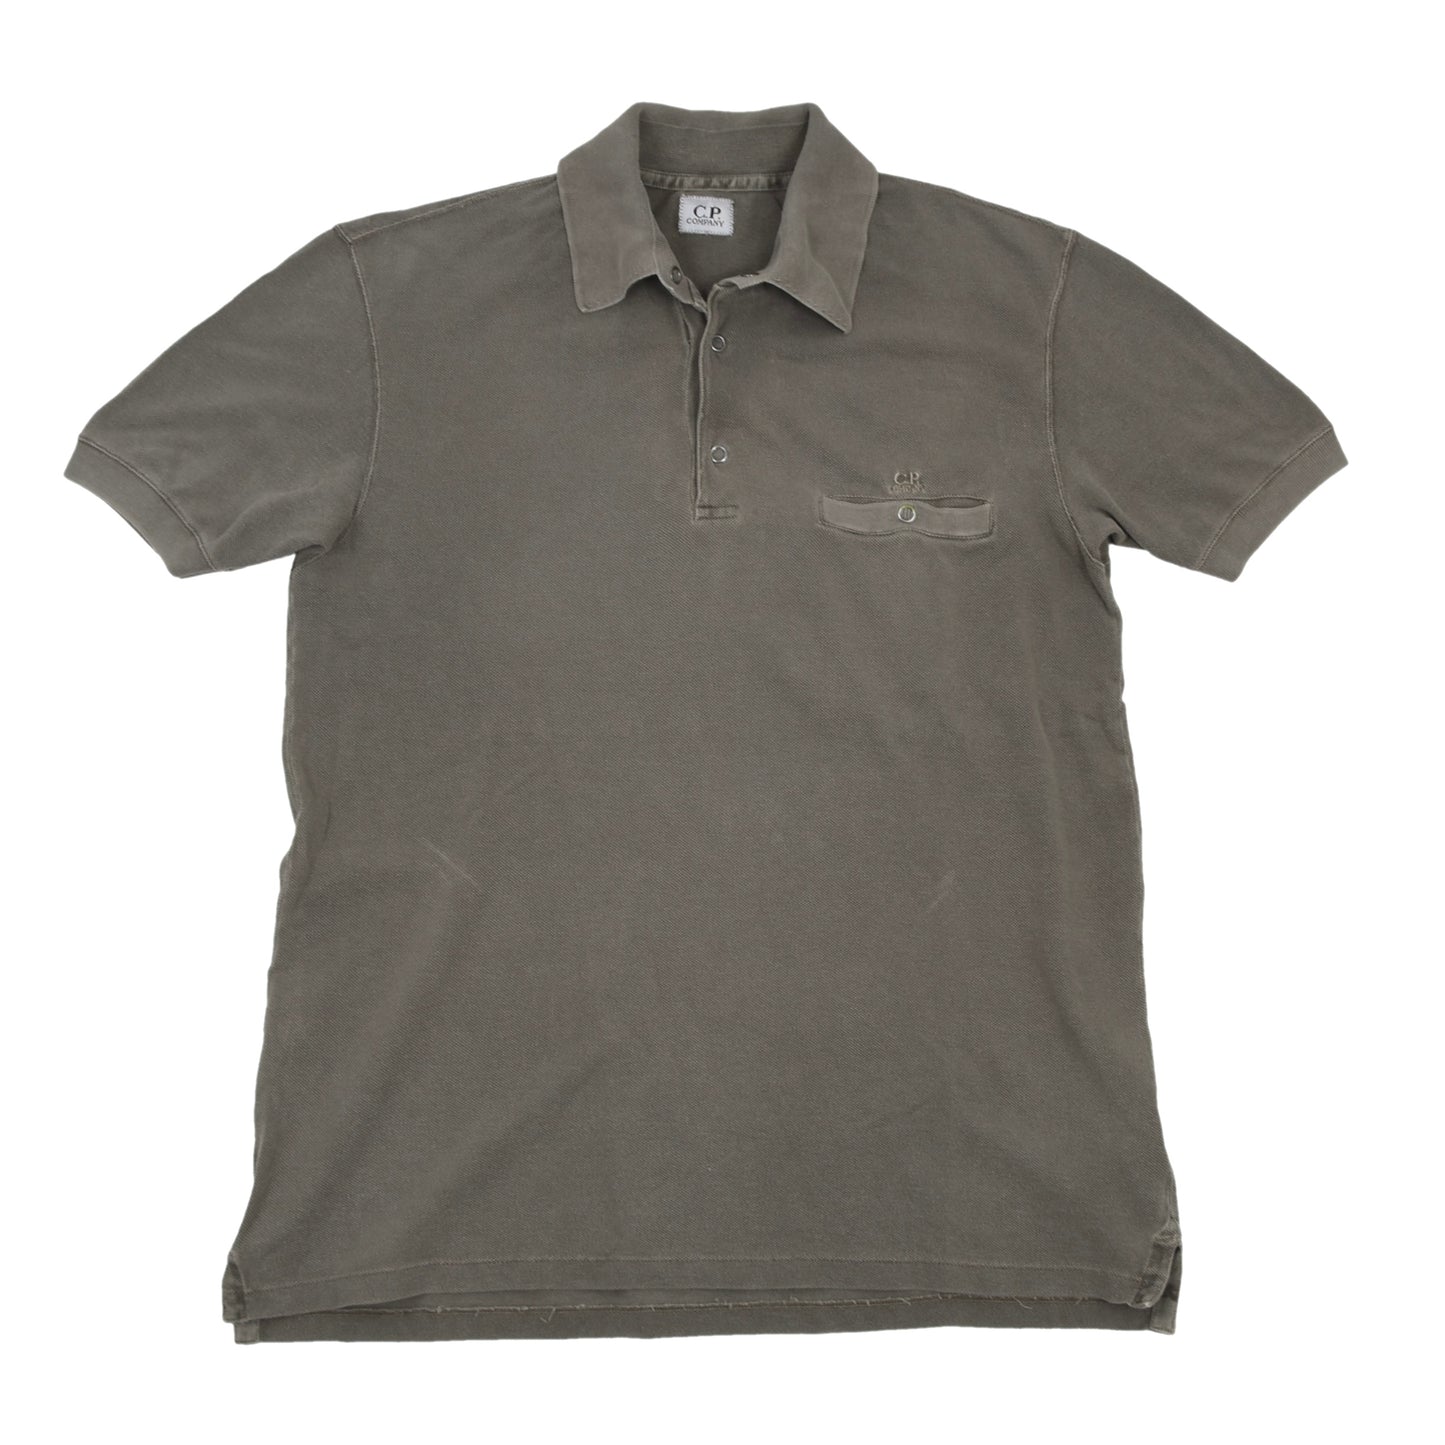 C.P. Company Cotton Polo T-Shirt SS 2006 Size M - Khaki Green